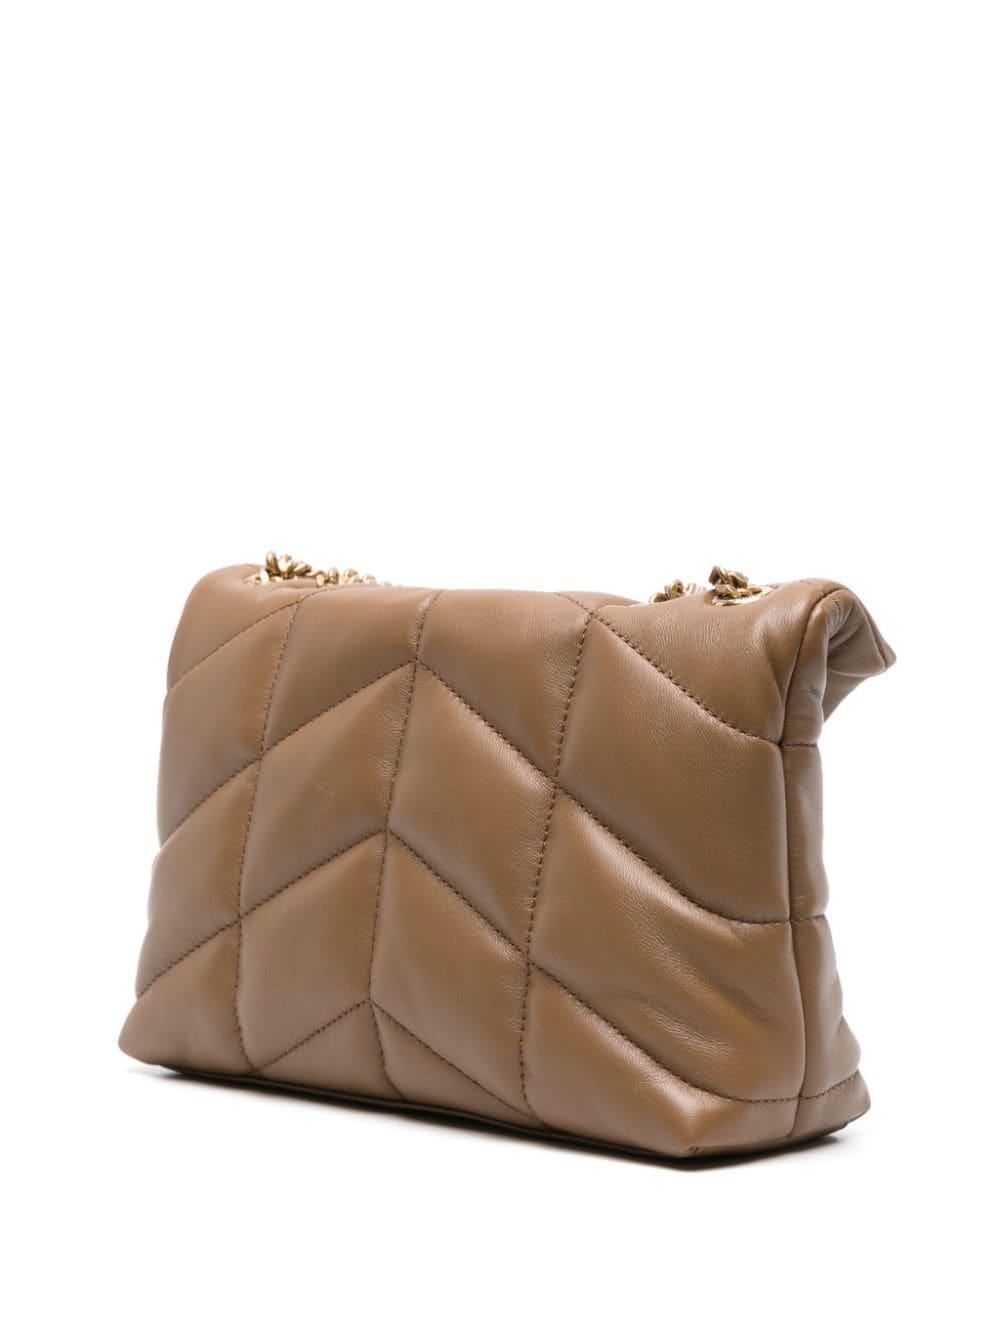 Saint Laurent small Puffer leather shoulder bag - Brown